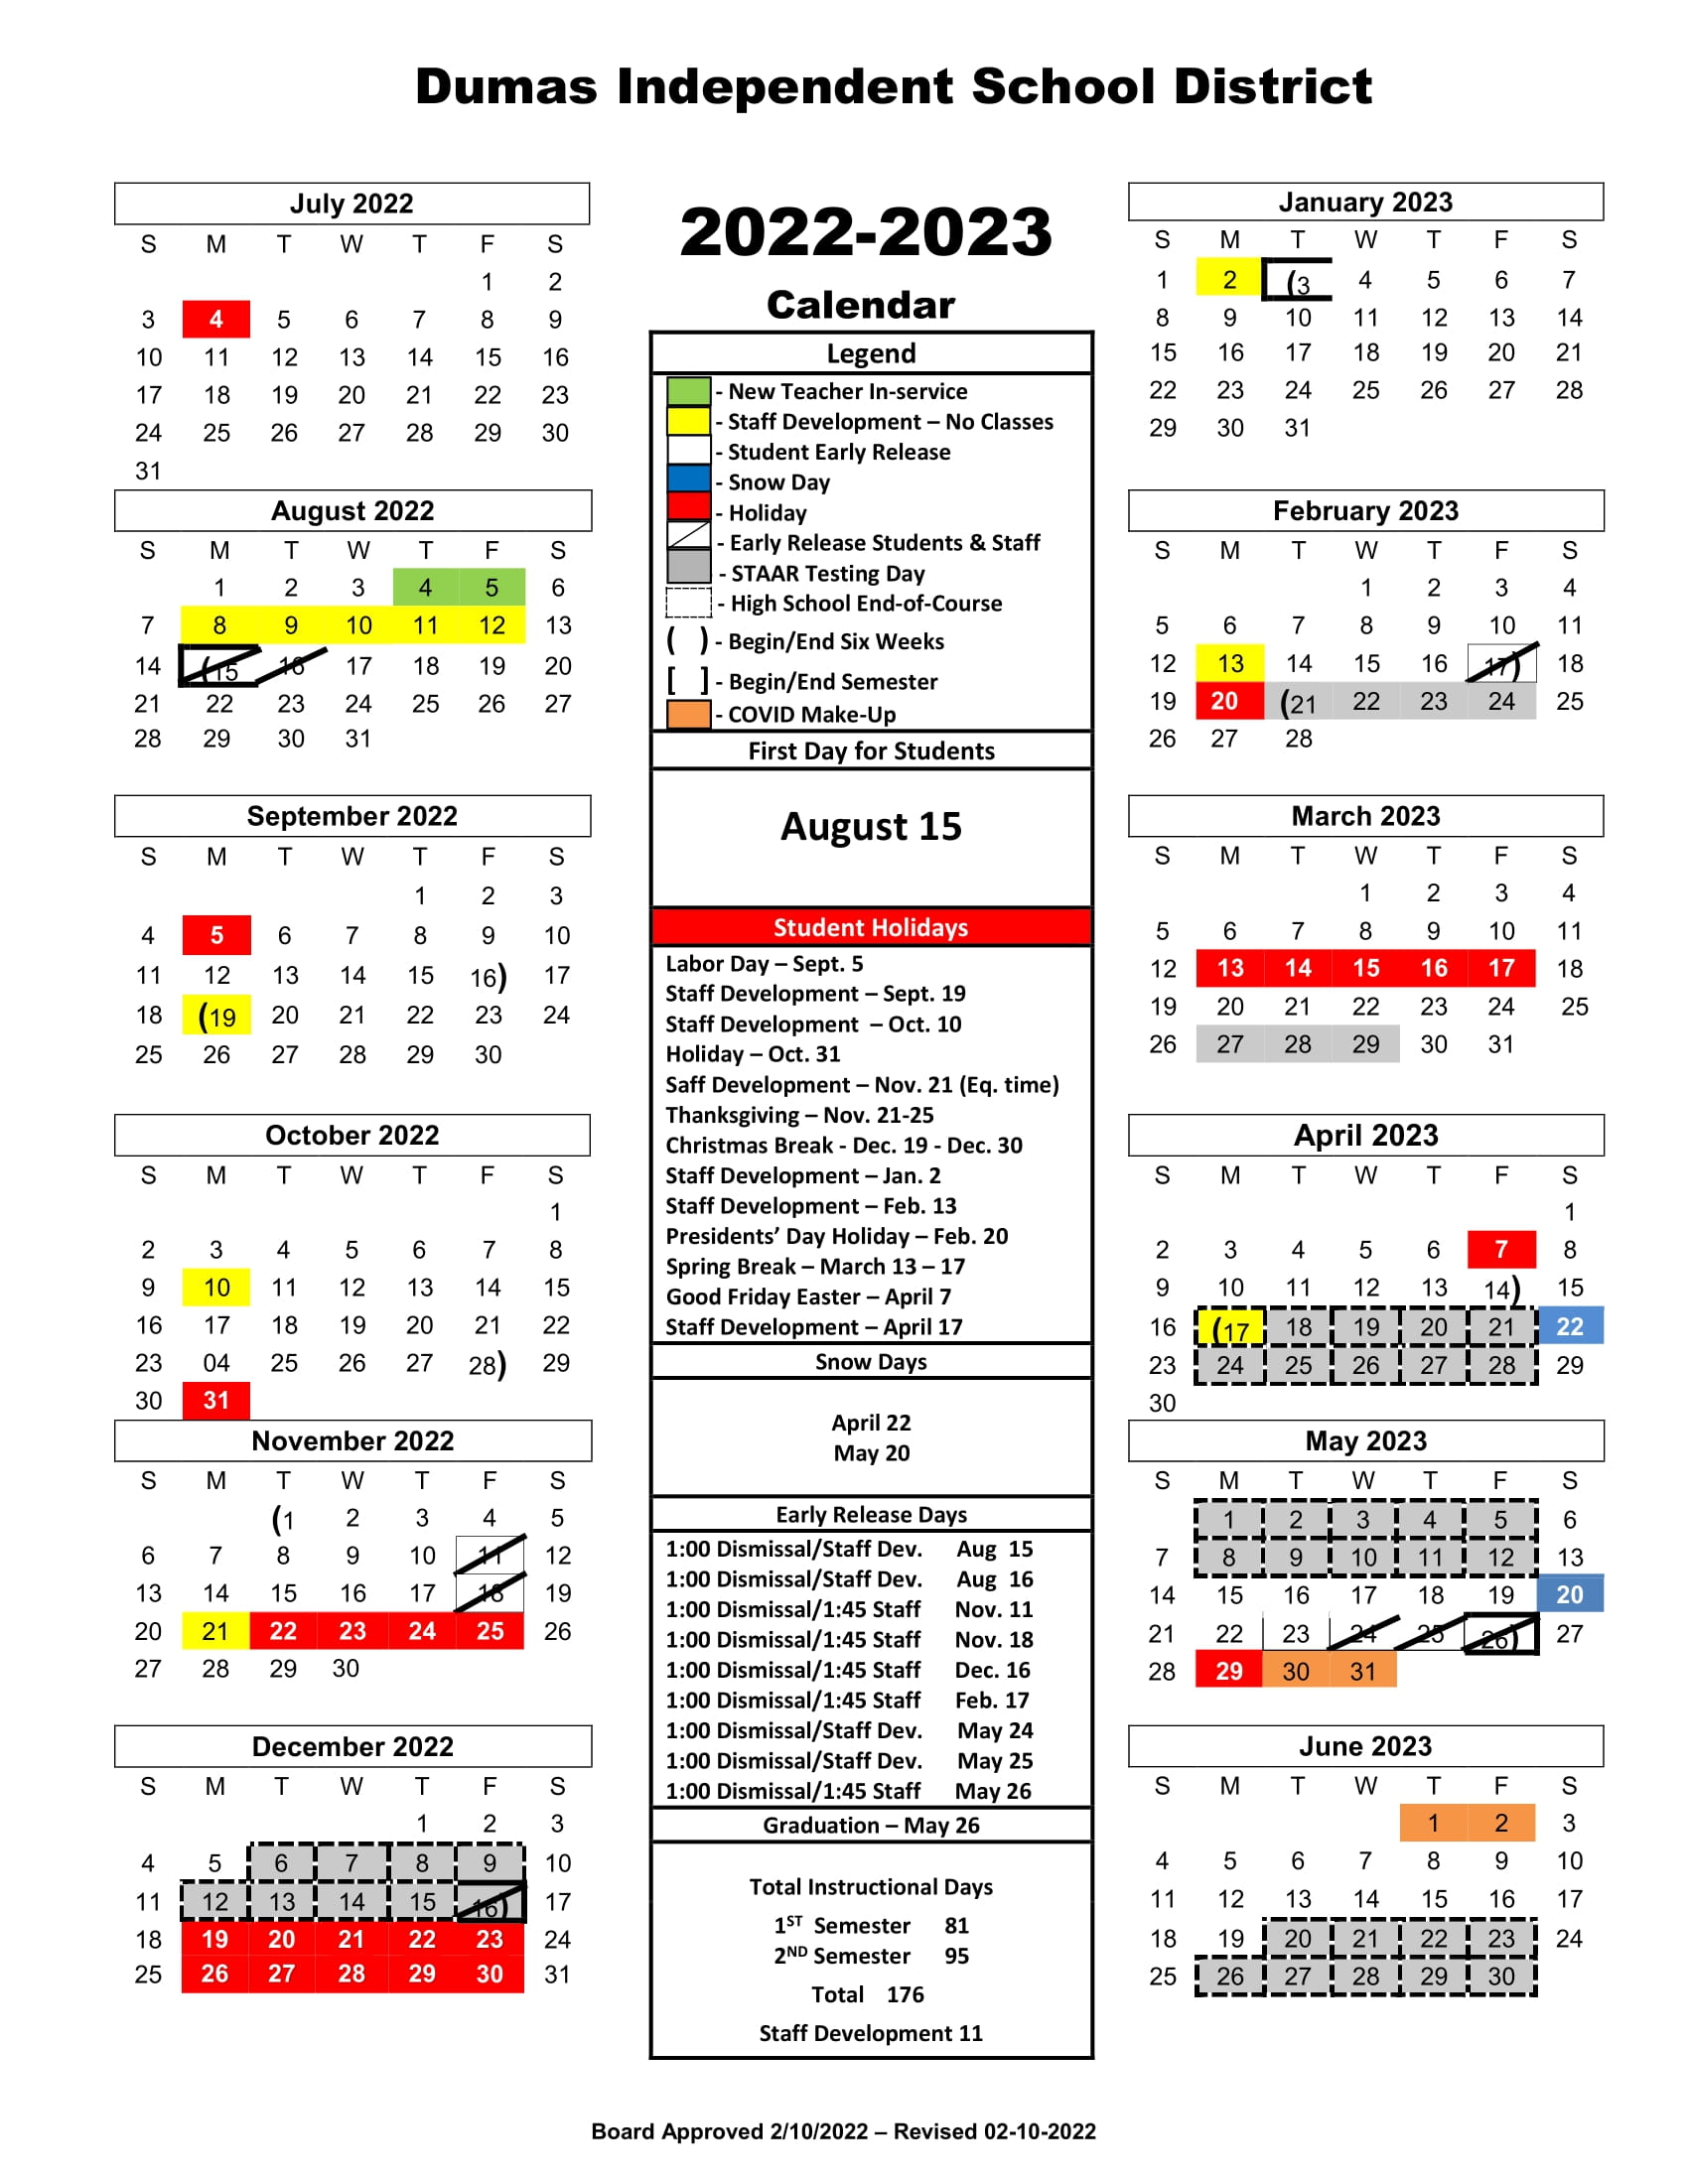 Disd Calendar 2022 2023 Dumas Isd 2022-2023 Calendar - Moore County Journal